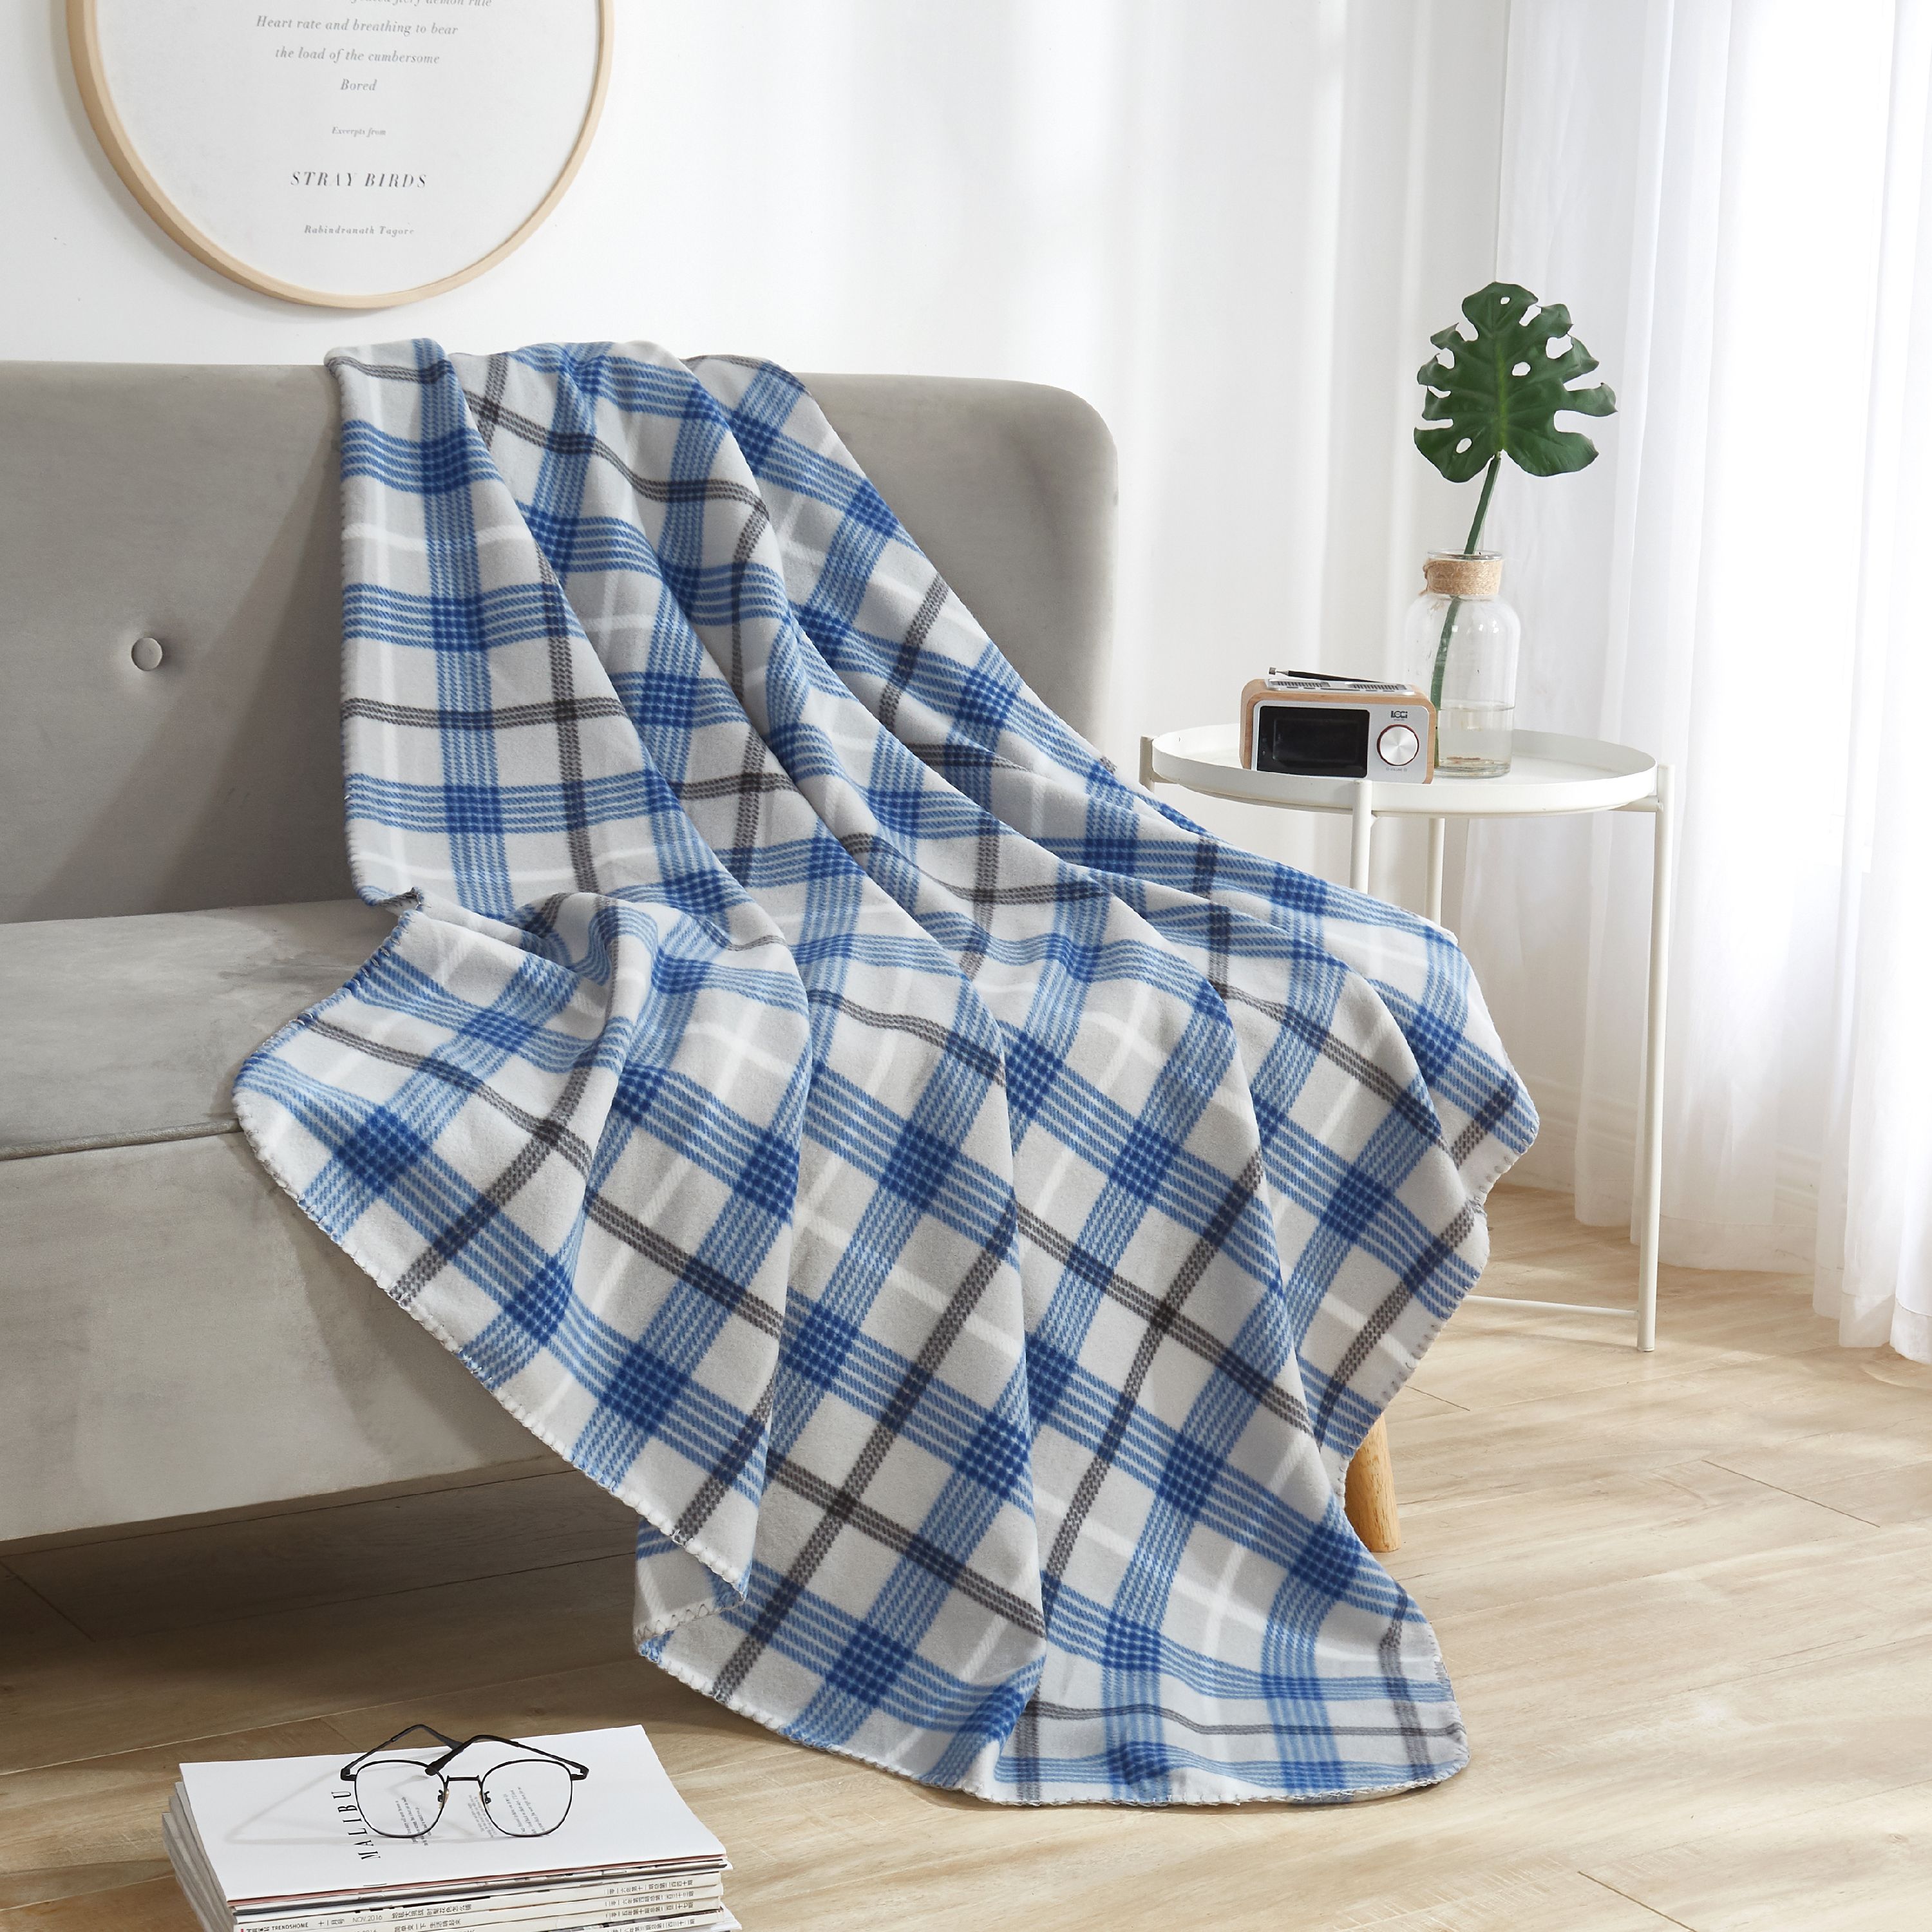 Mainstays Fleece Gray & Blue Plaid Throw Blanket, 50" x 60" - image 2 of 5